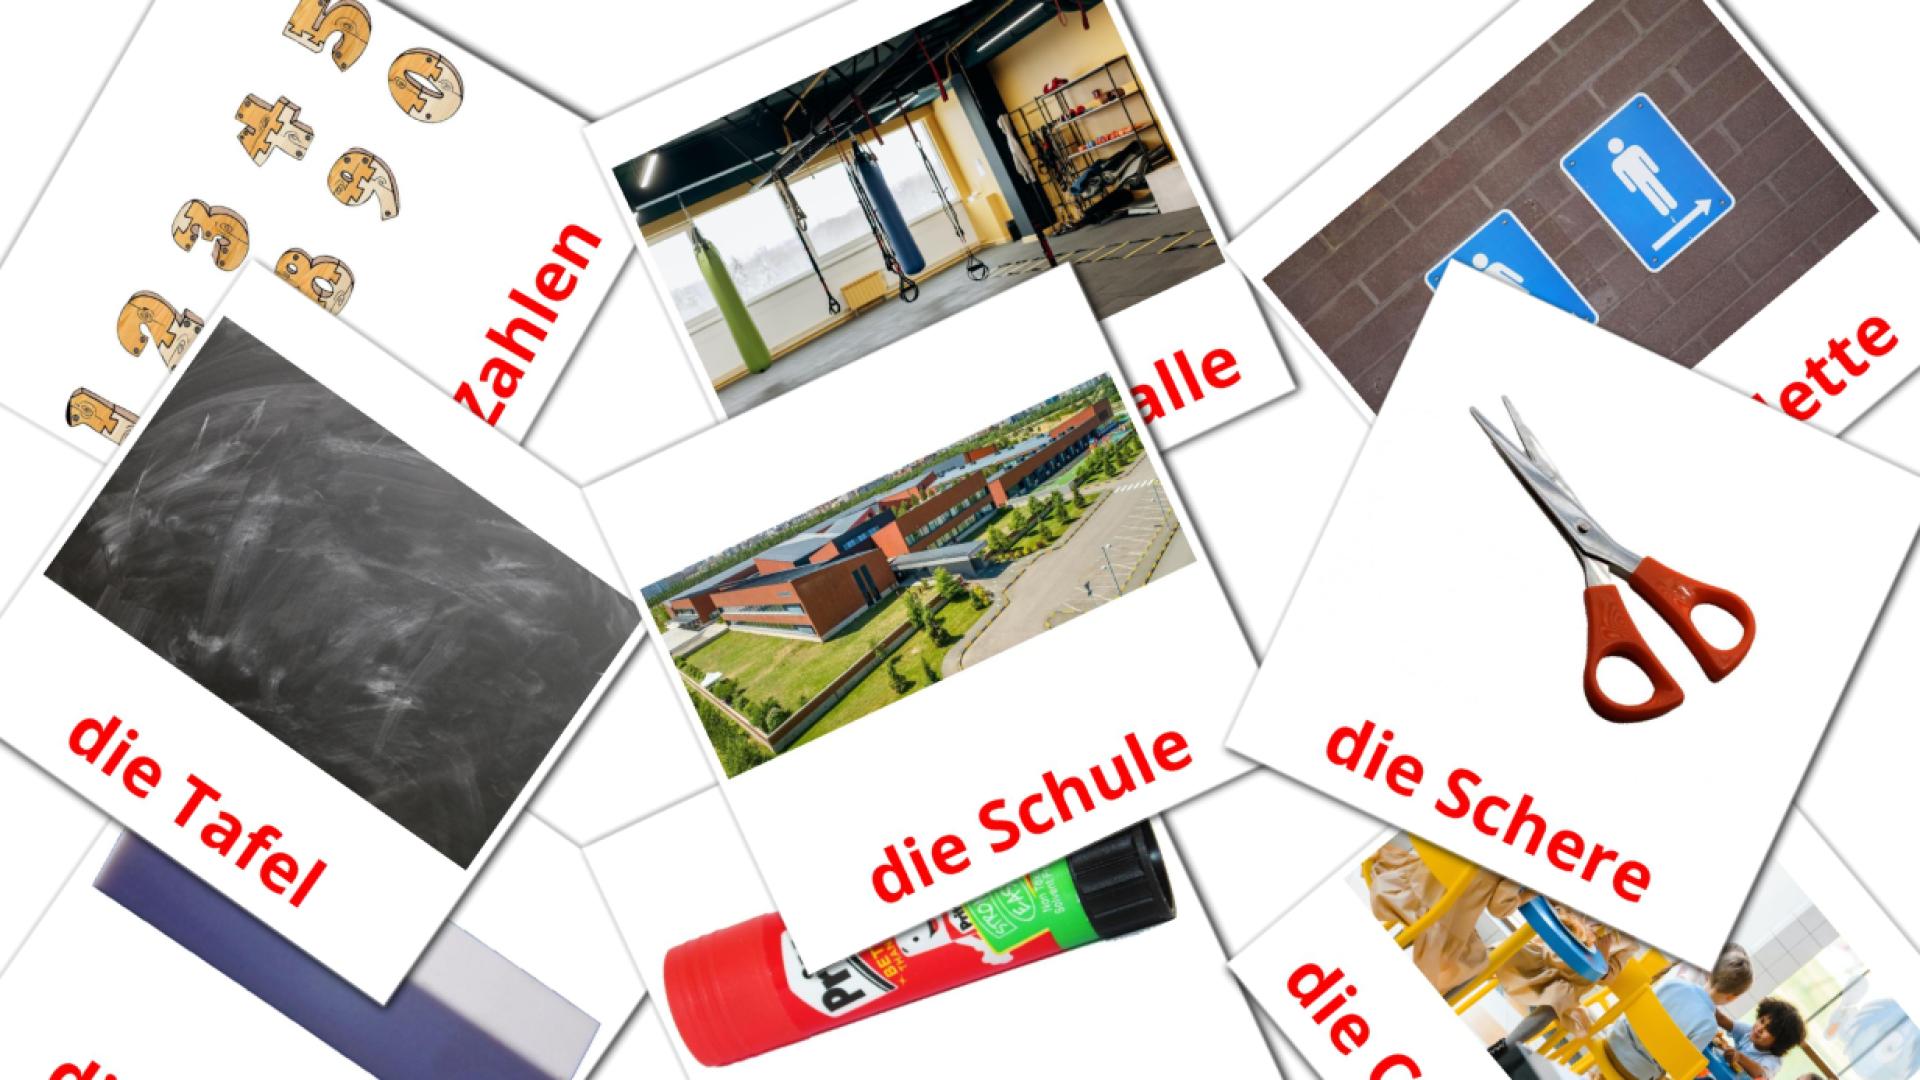 Schule german vocabulary flashcards